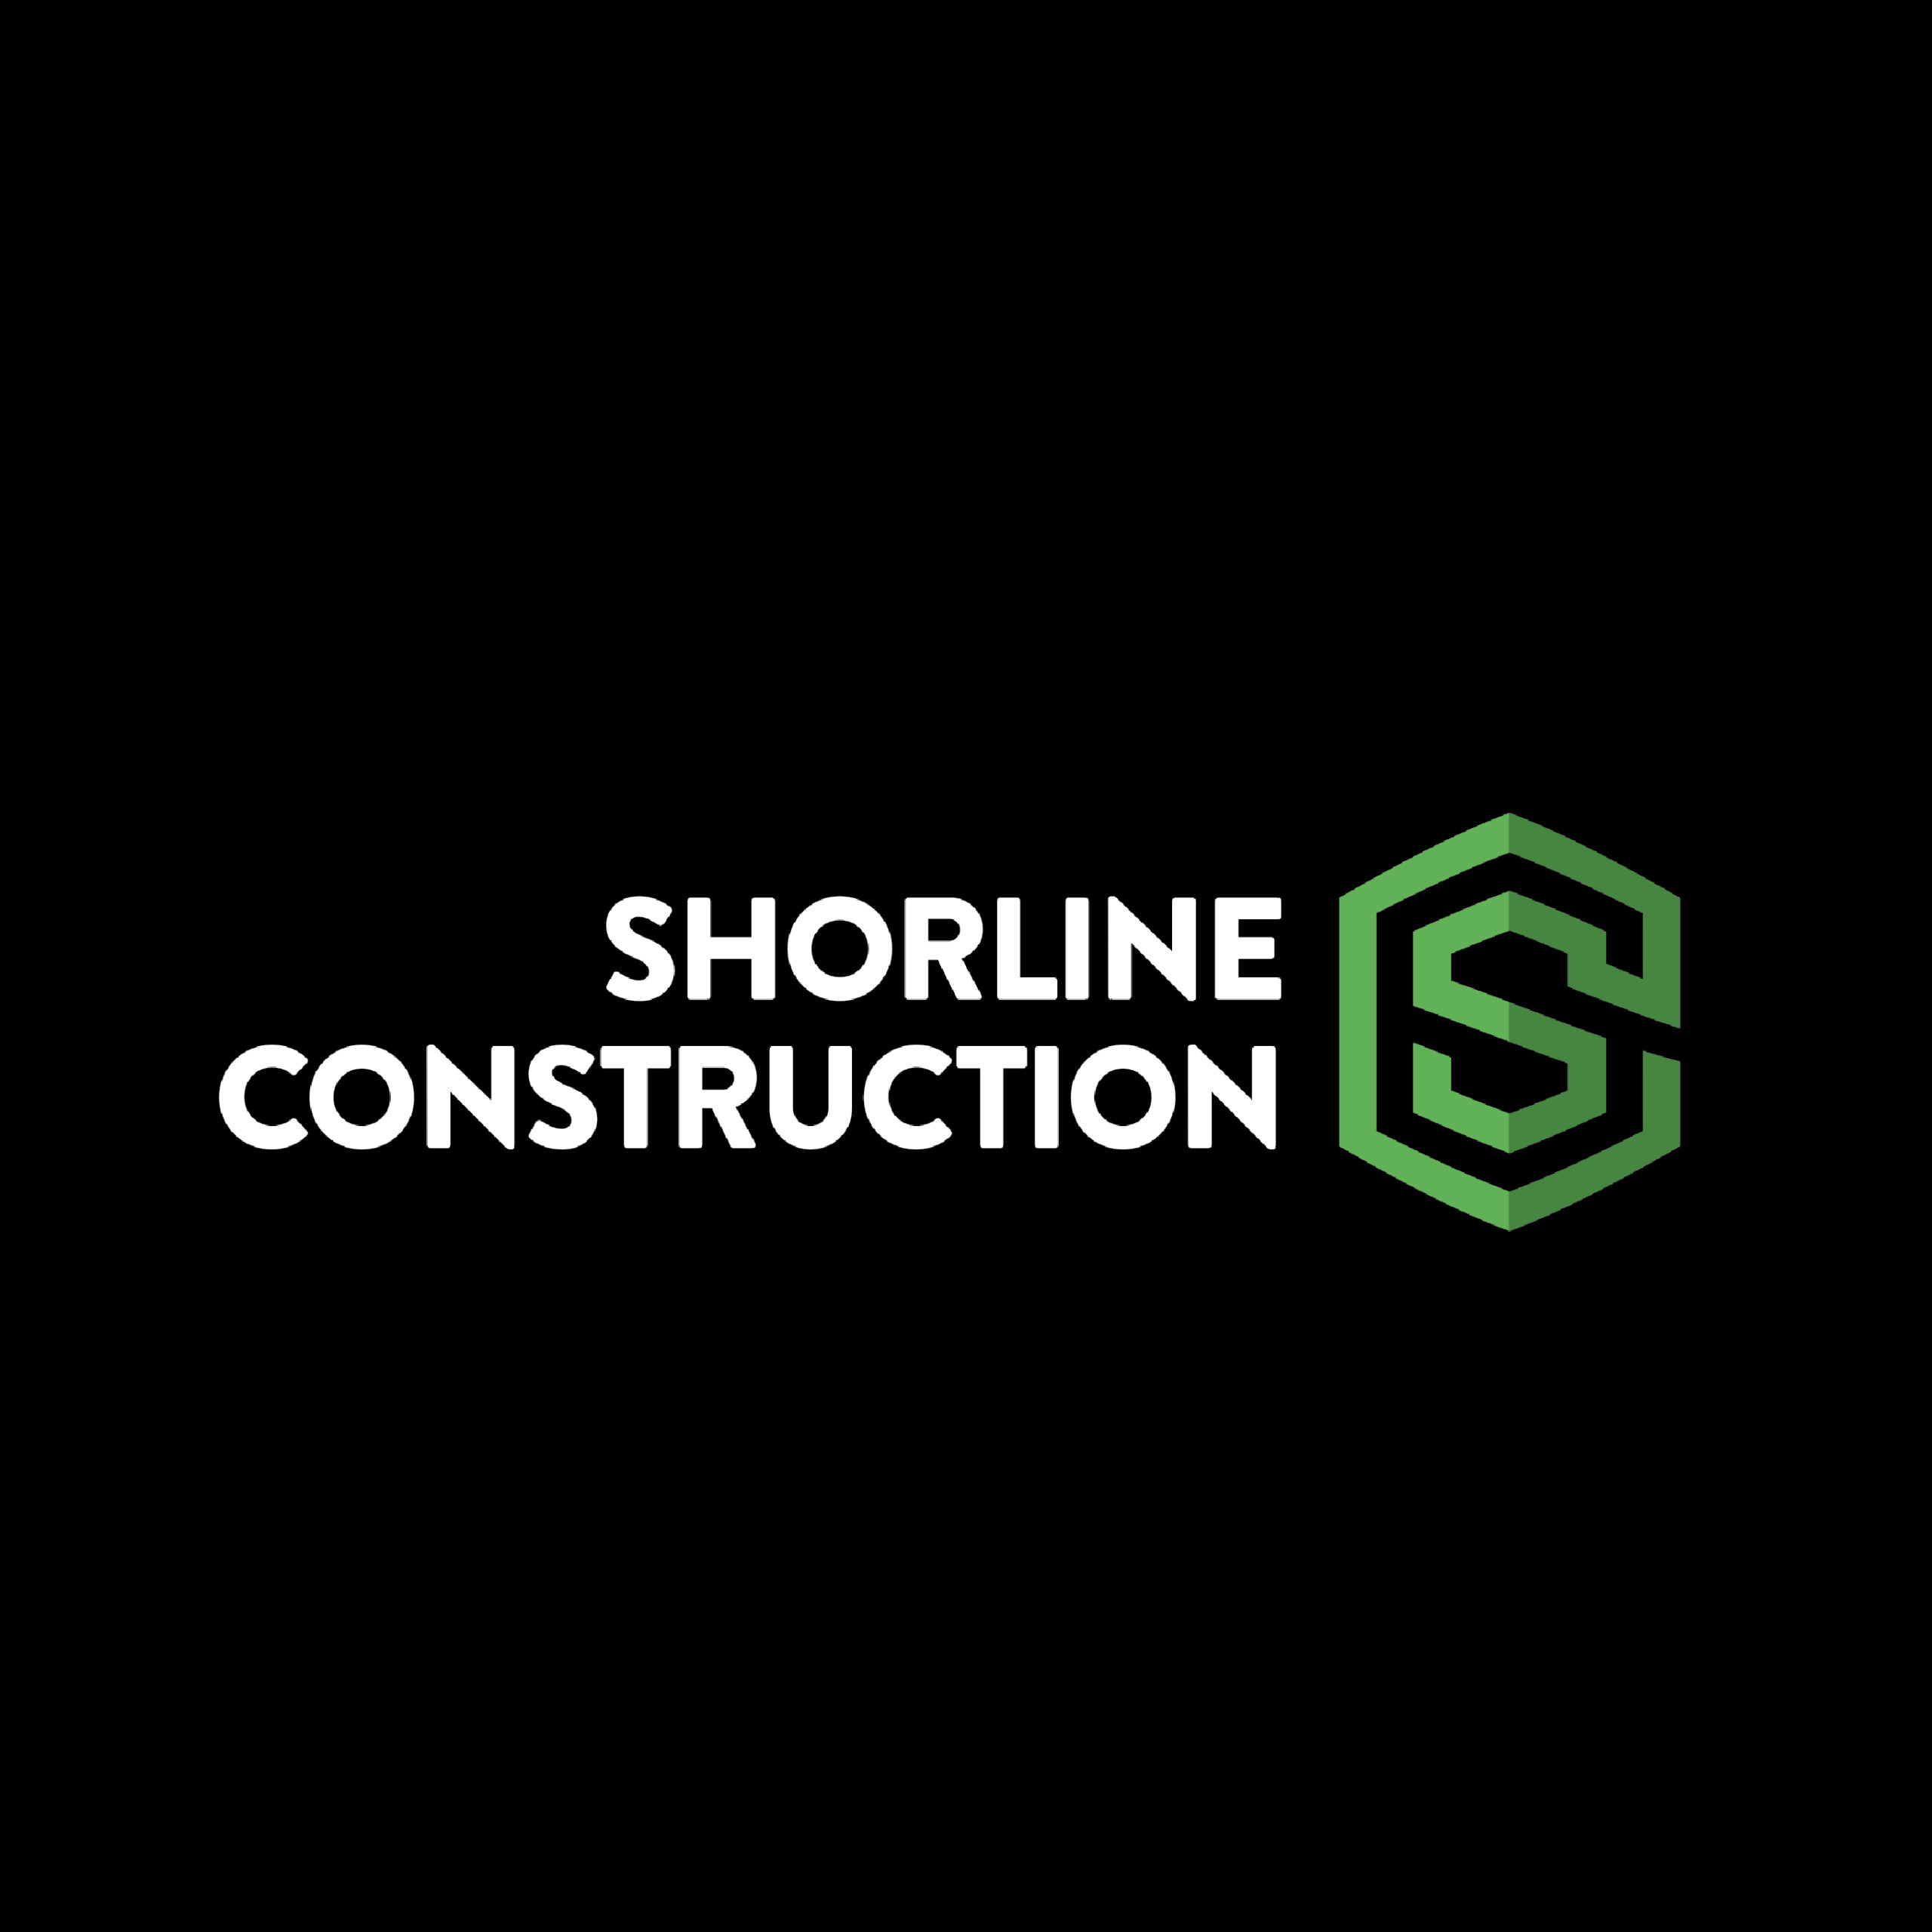 Shorline Construction Logo | Brand Design